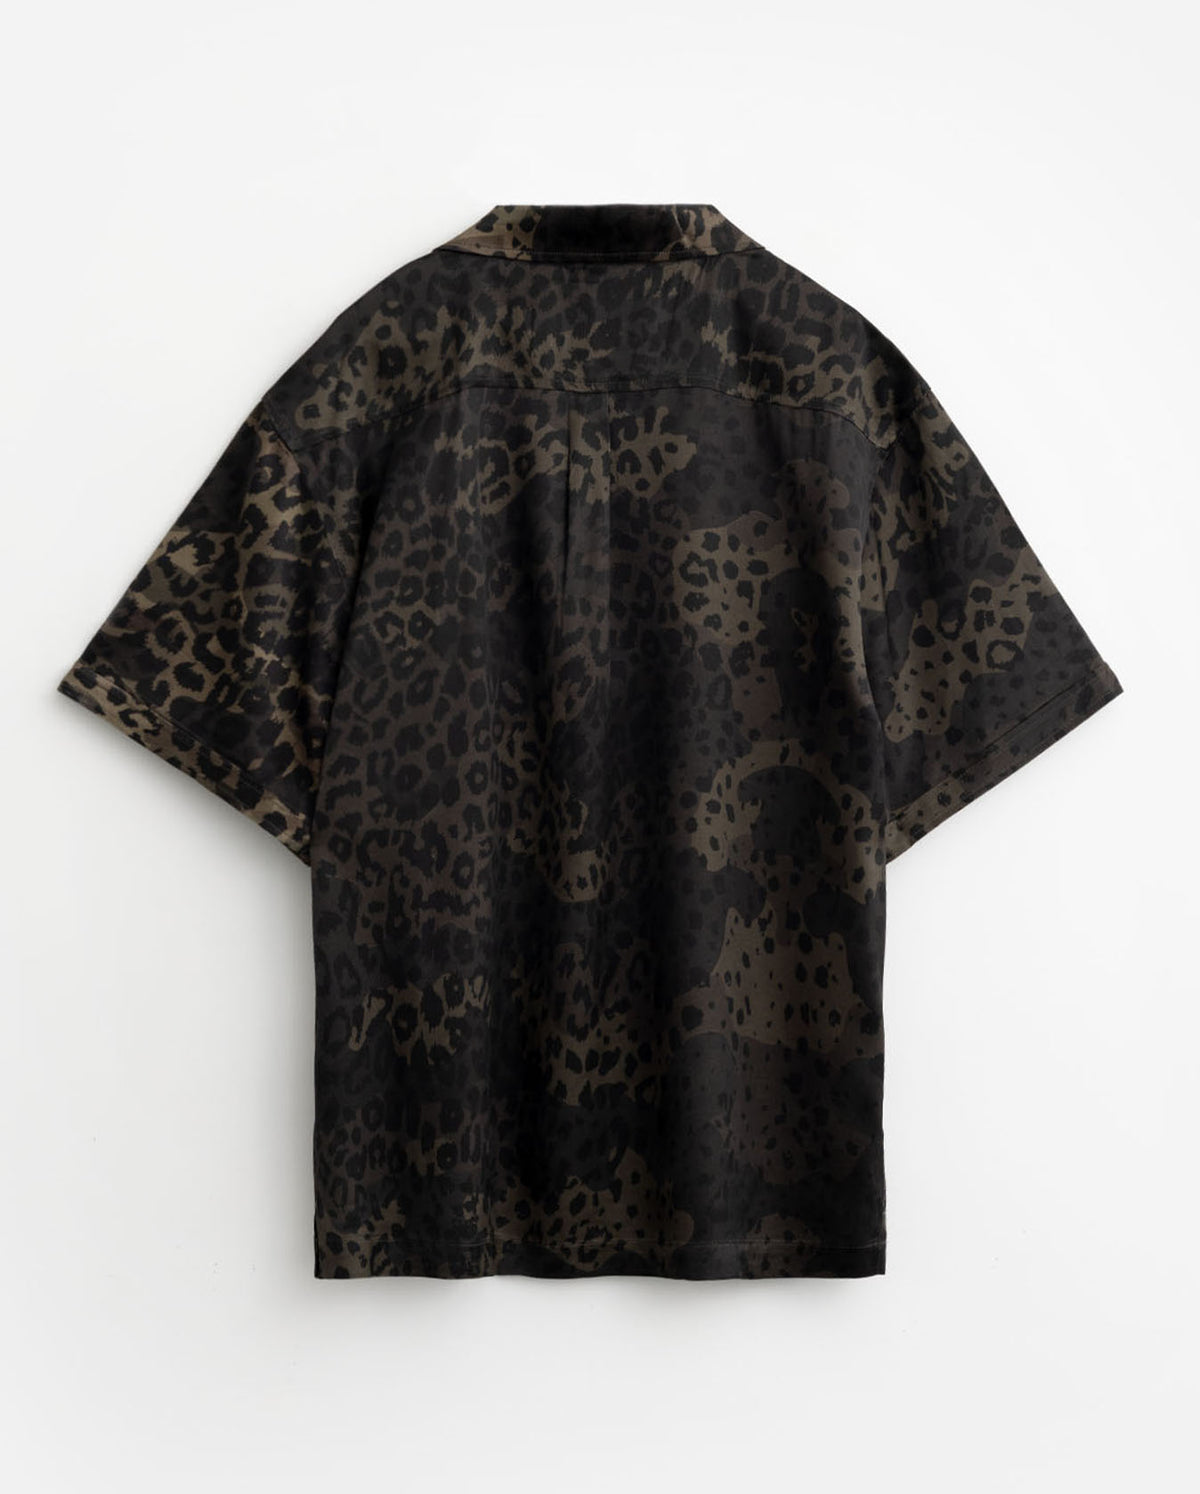 Dual Camo Camp Shirt - Leopard